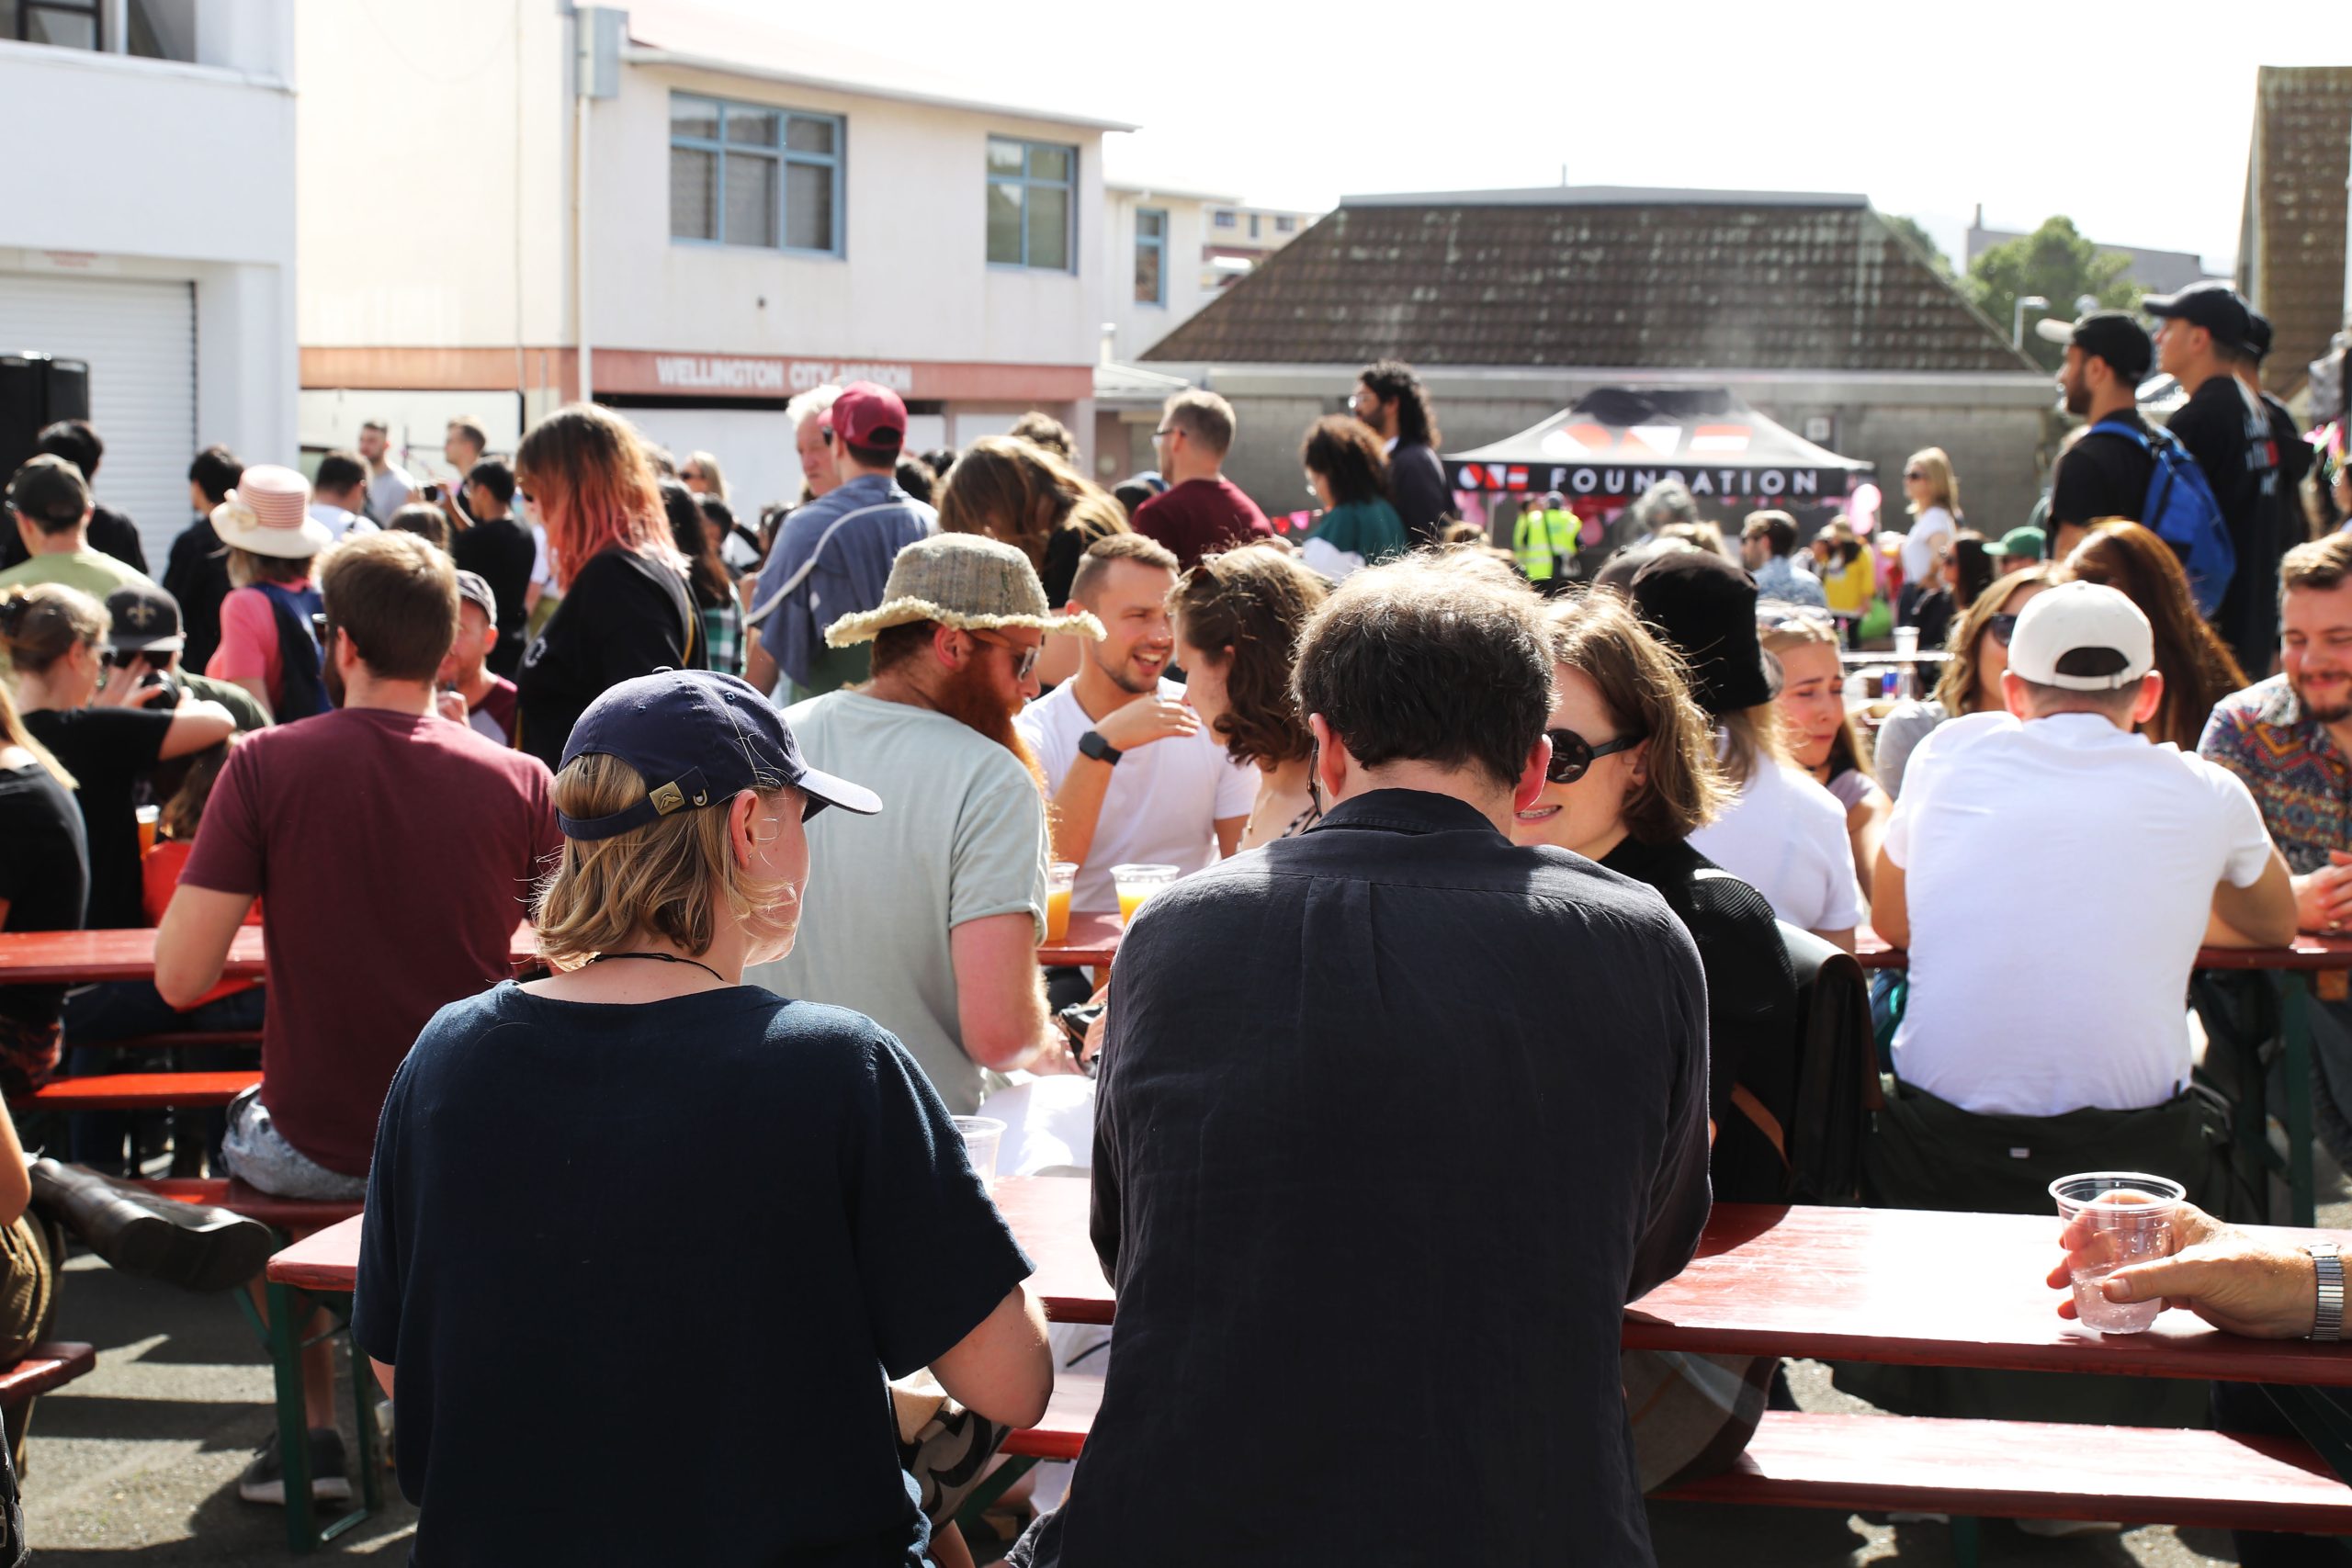 Wellington Crowds Enjoy Newtown Festival Following Postponement Due To COVID 19